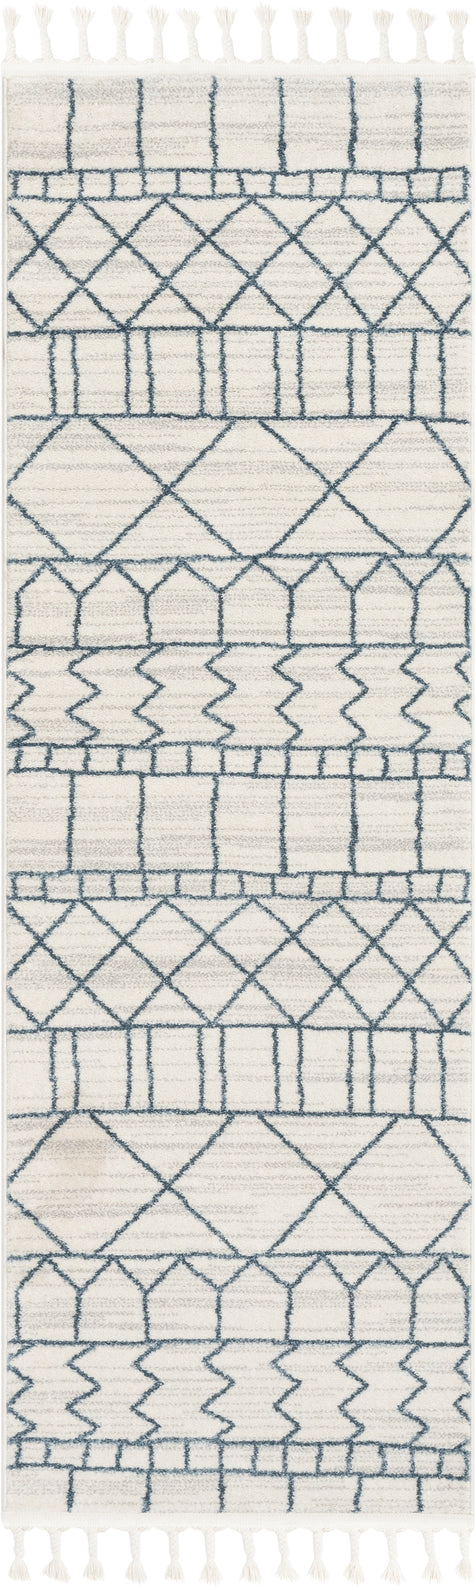 Schematica Nordic Tribal Geometric Pattern Ivory Blue Rug